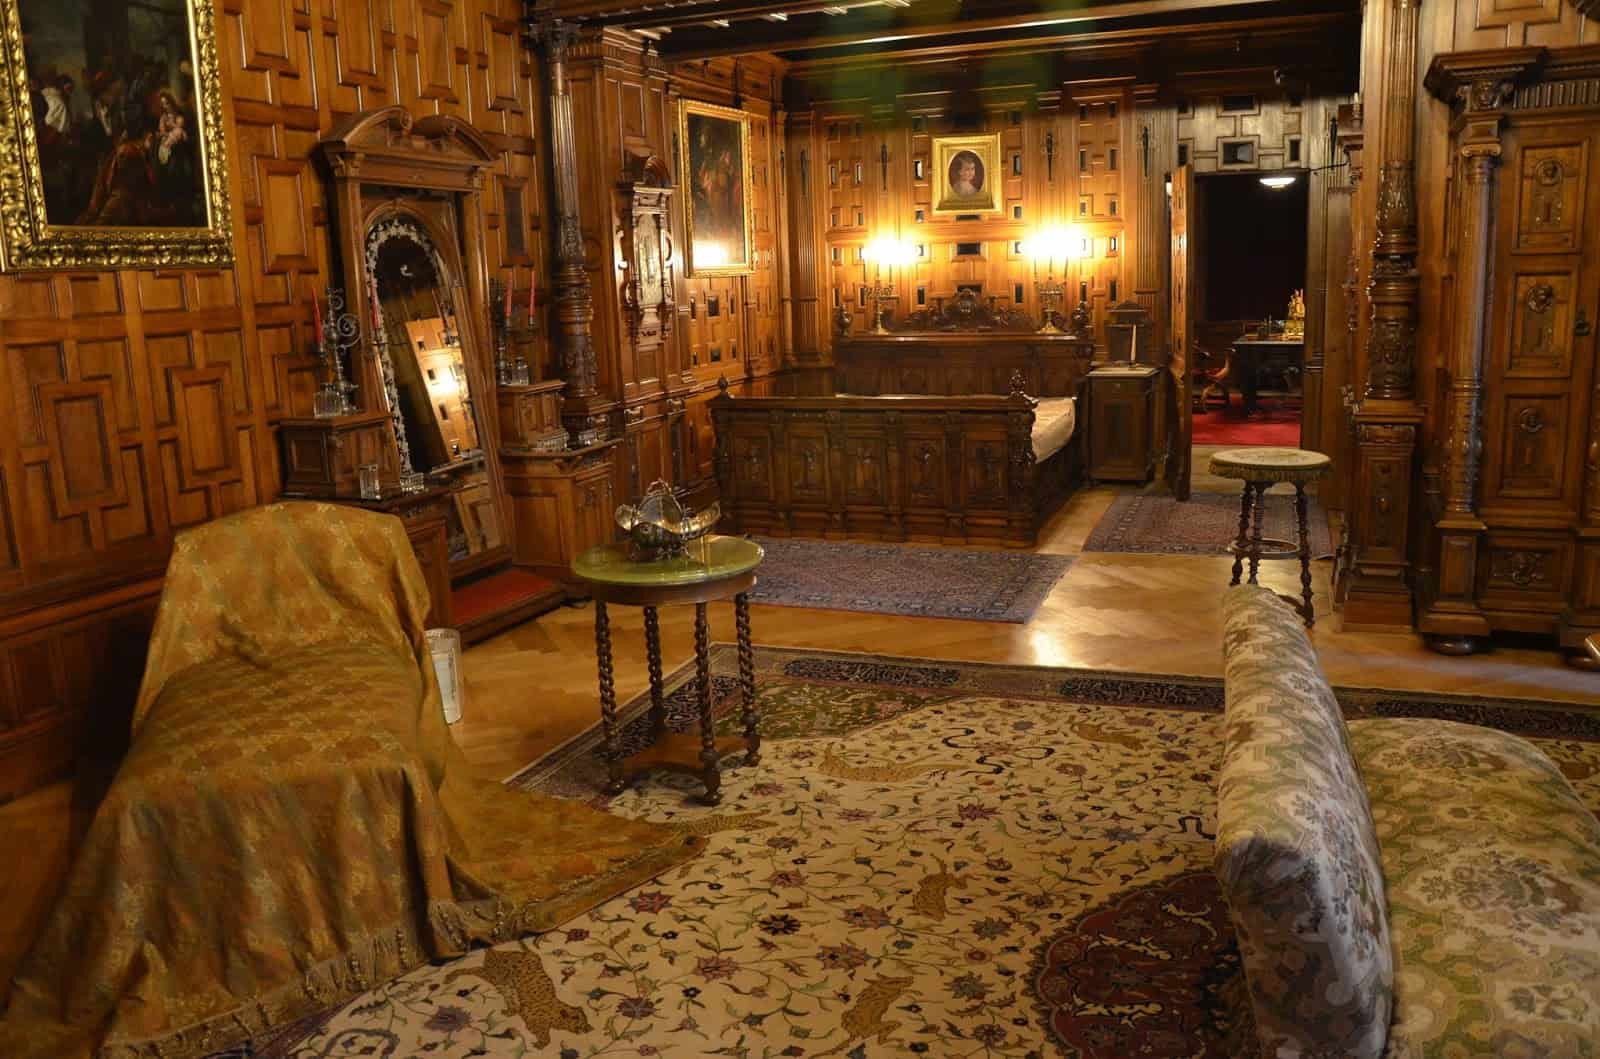 Royal Bedroom at Peleș Castle in Sinaia, Romania